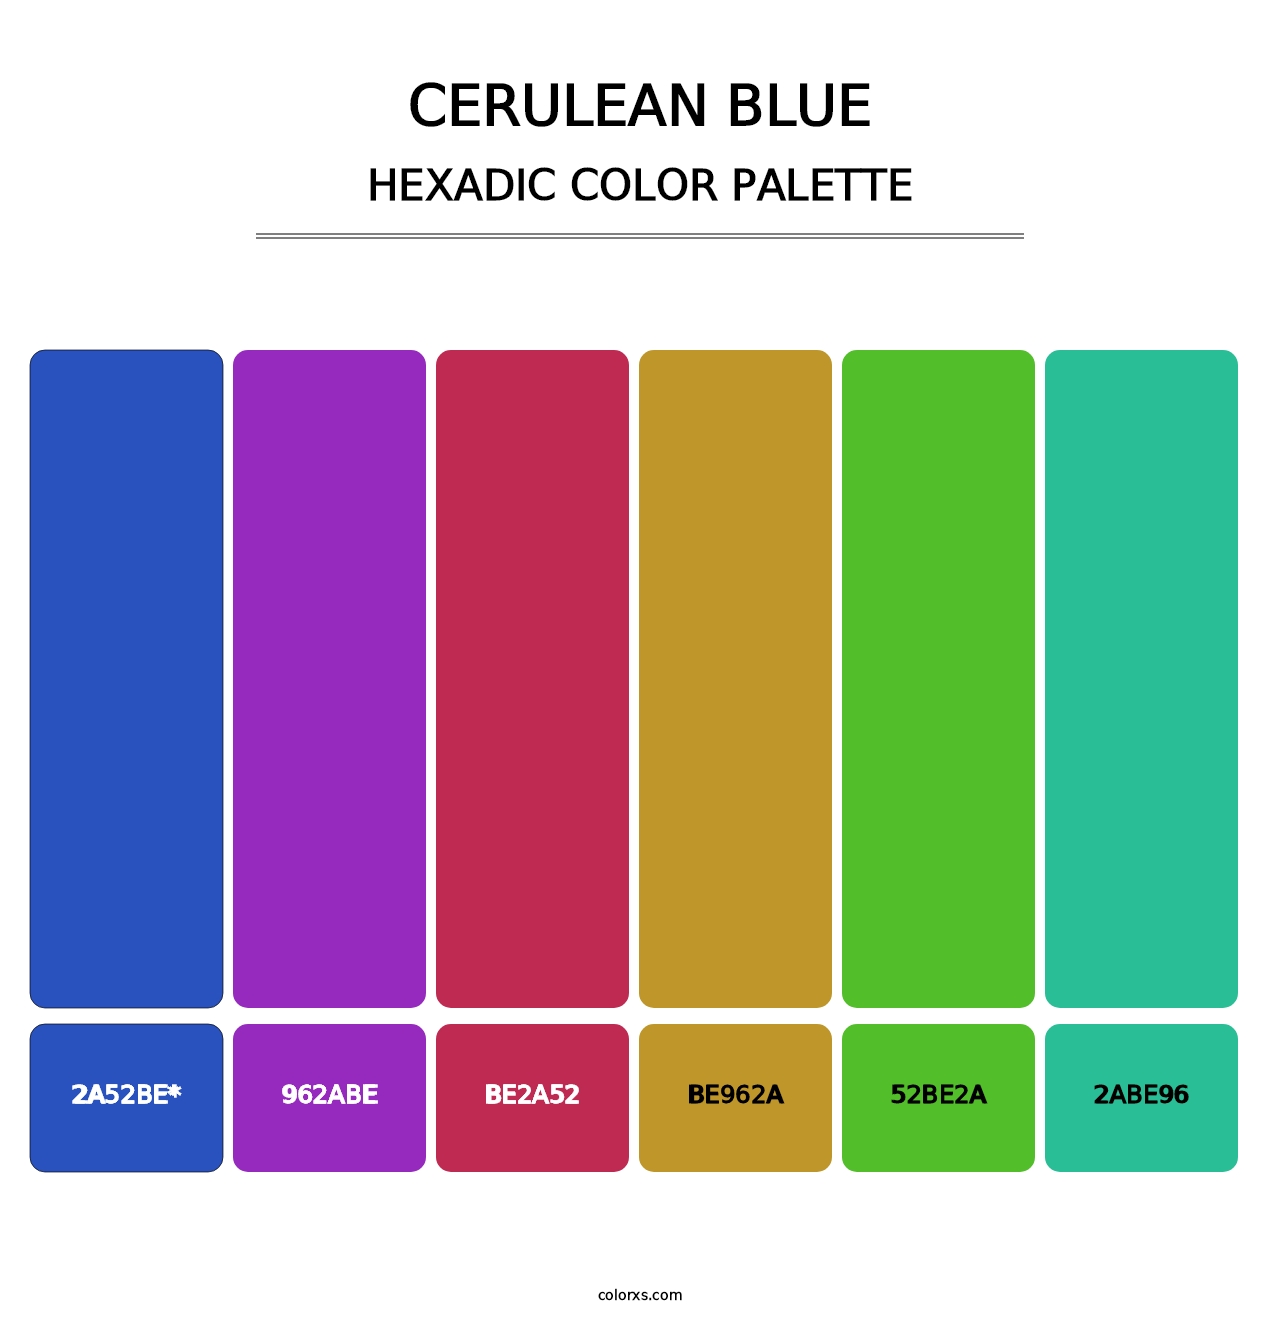 Cerulean blue - Hexadic Color Palette